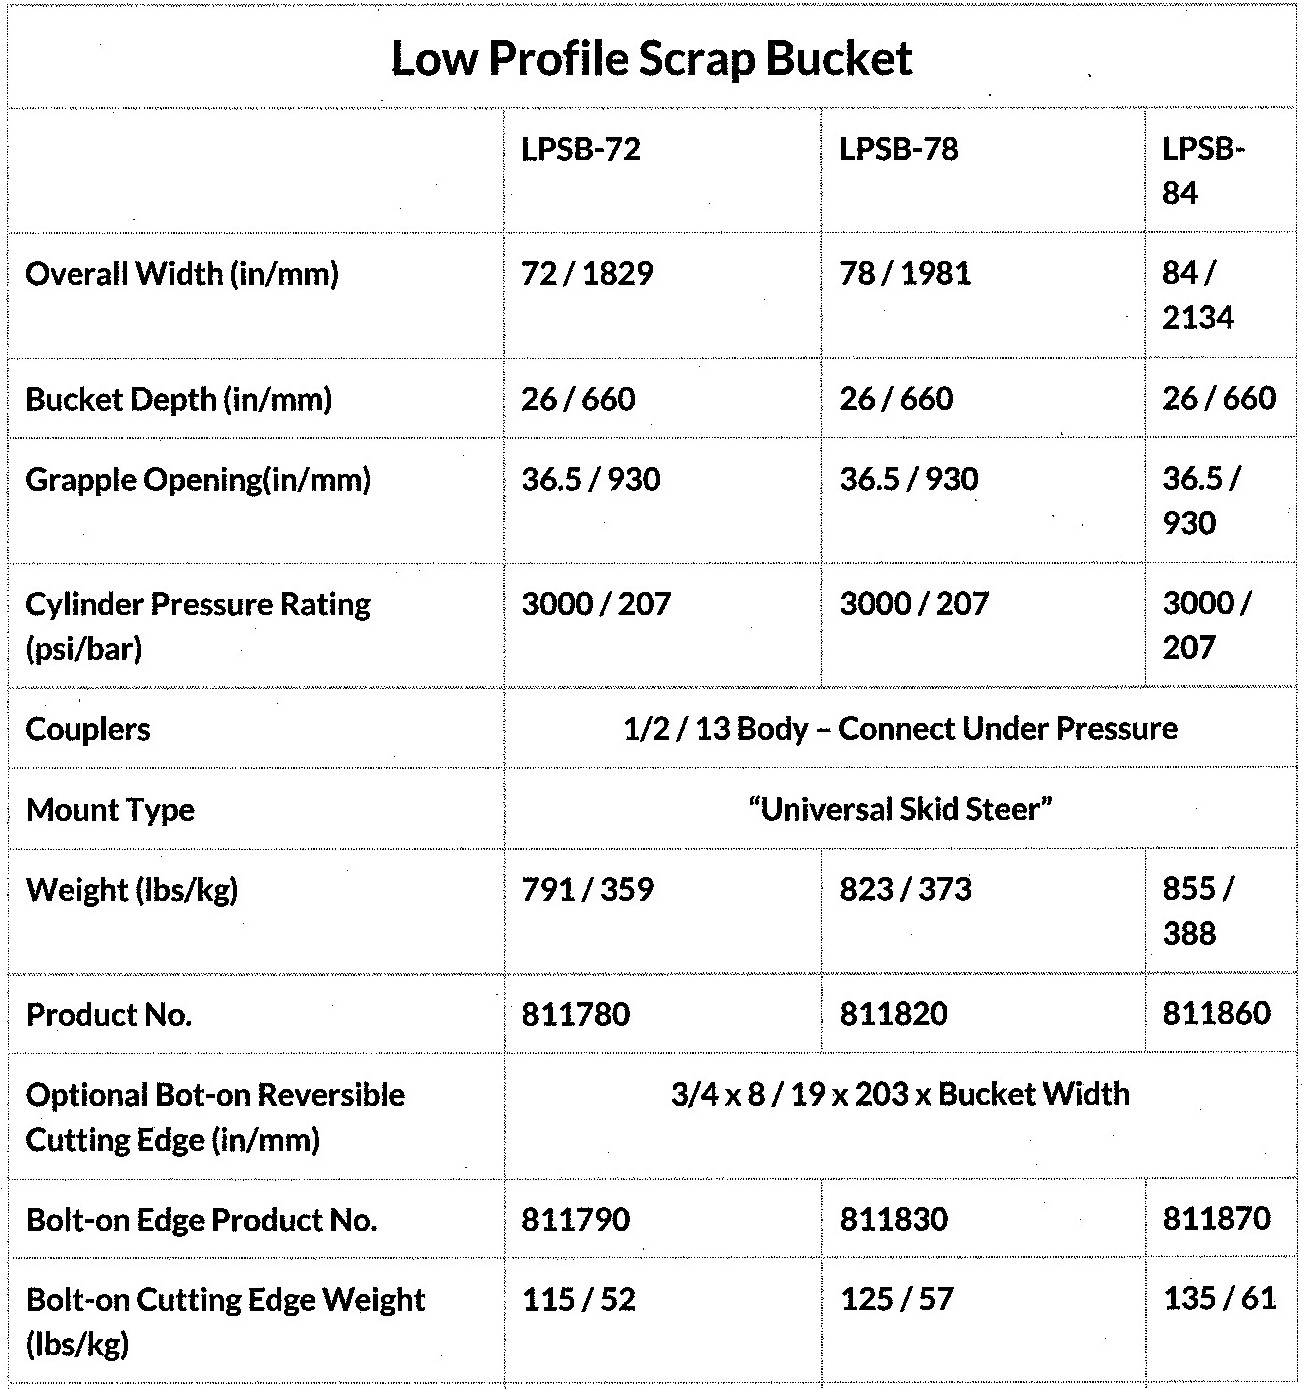 Specifications For Skid Steer Mount, Low Profile Scrap Bucket